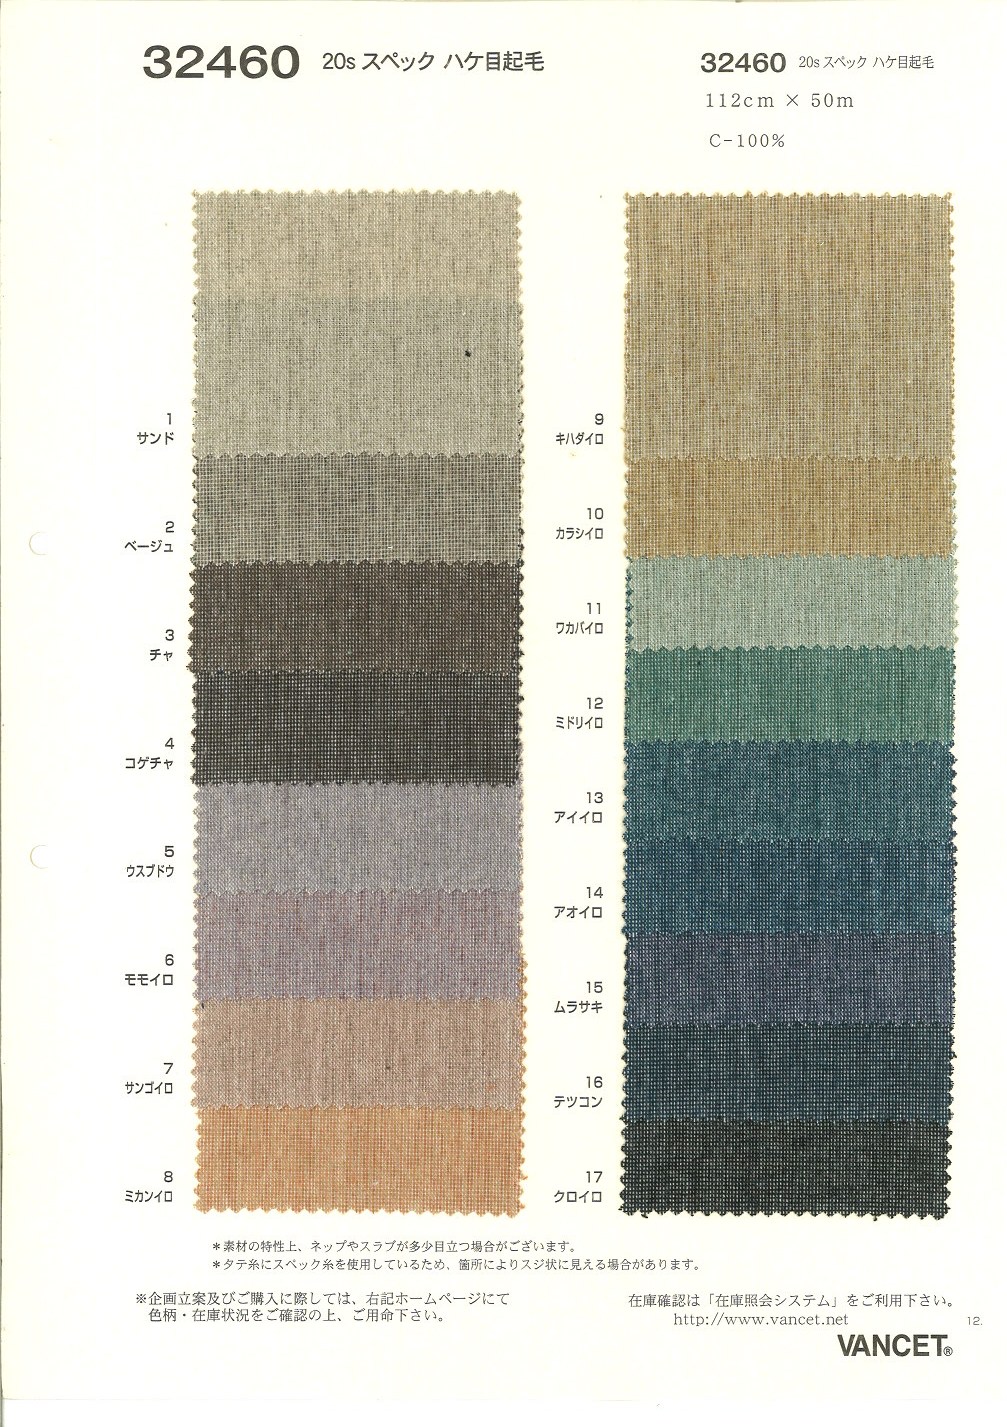 32460 20 Thread-Spezifikation Fuzzy[Textilgewebe] VANCET